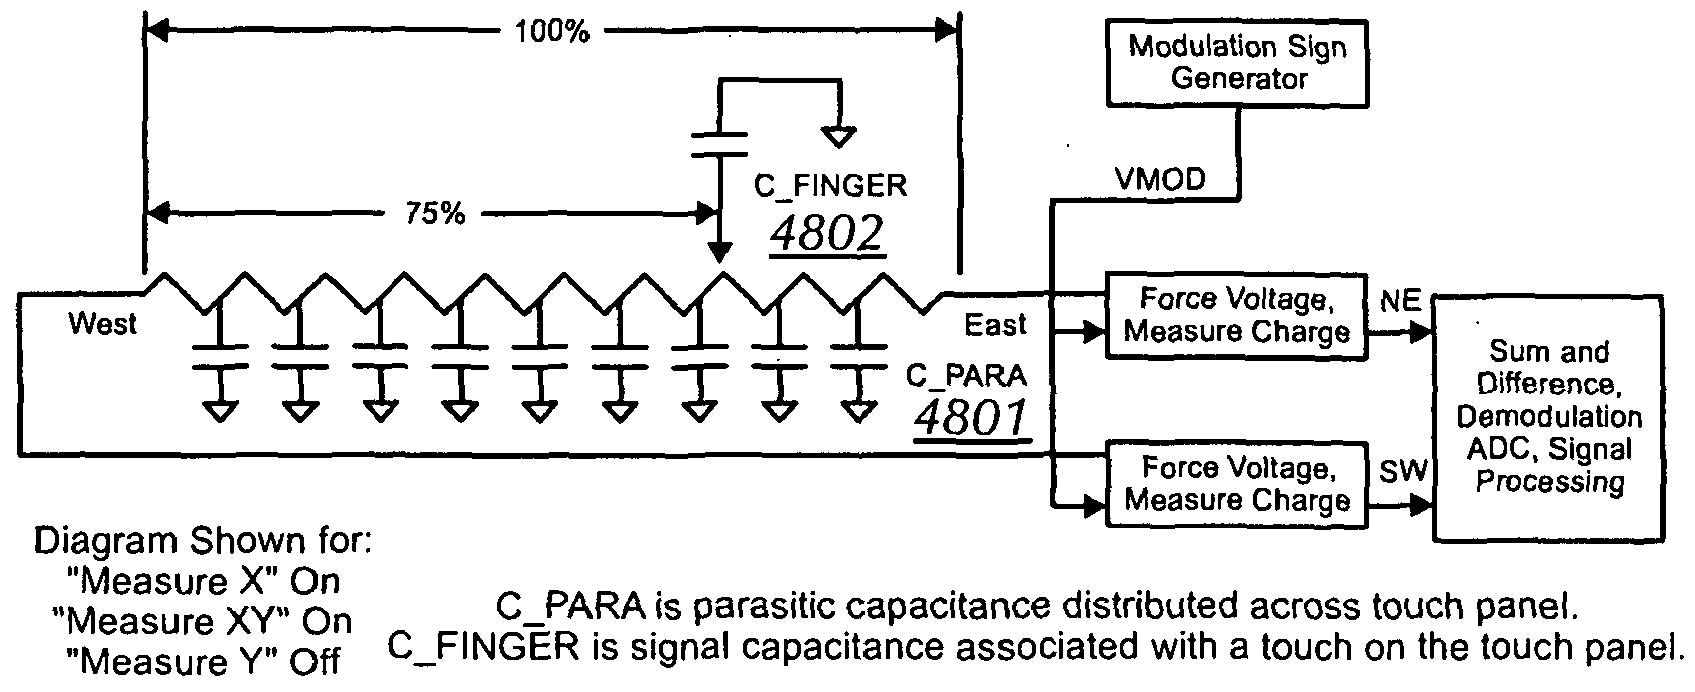 10406 interupt harness 12-pin wiring diagram